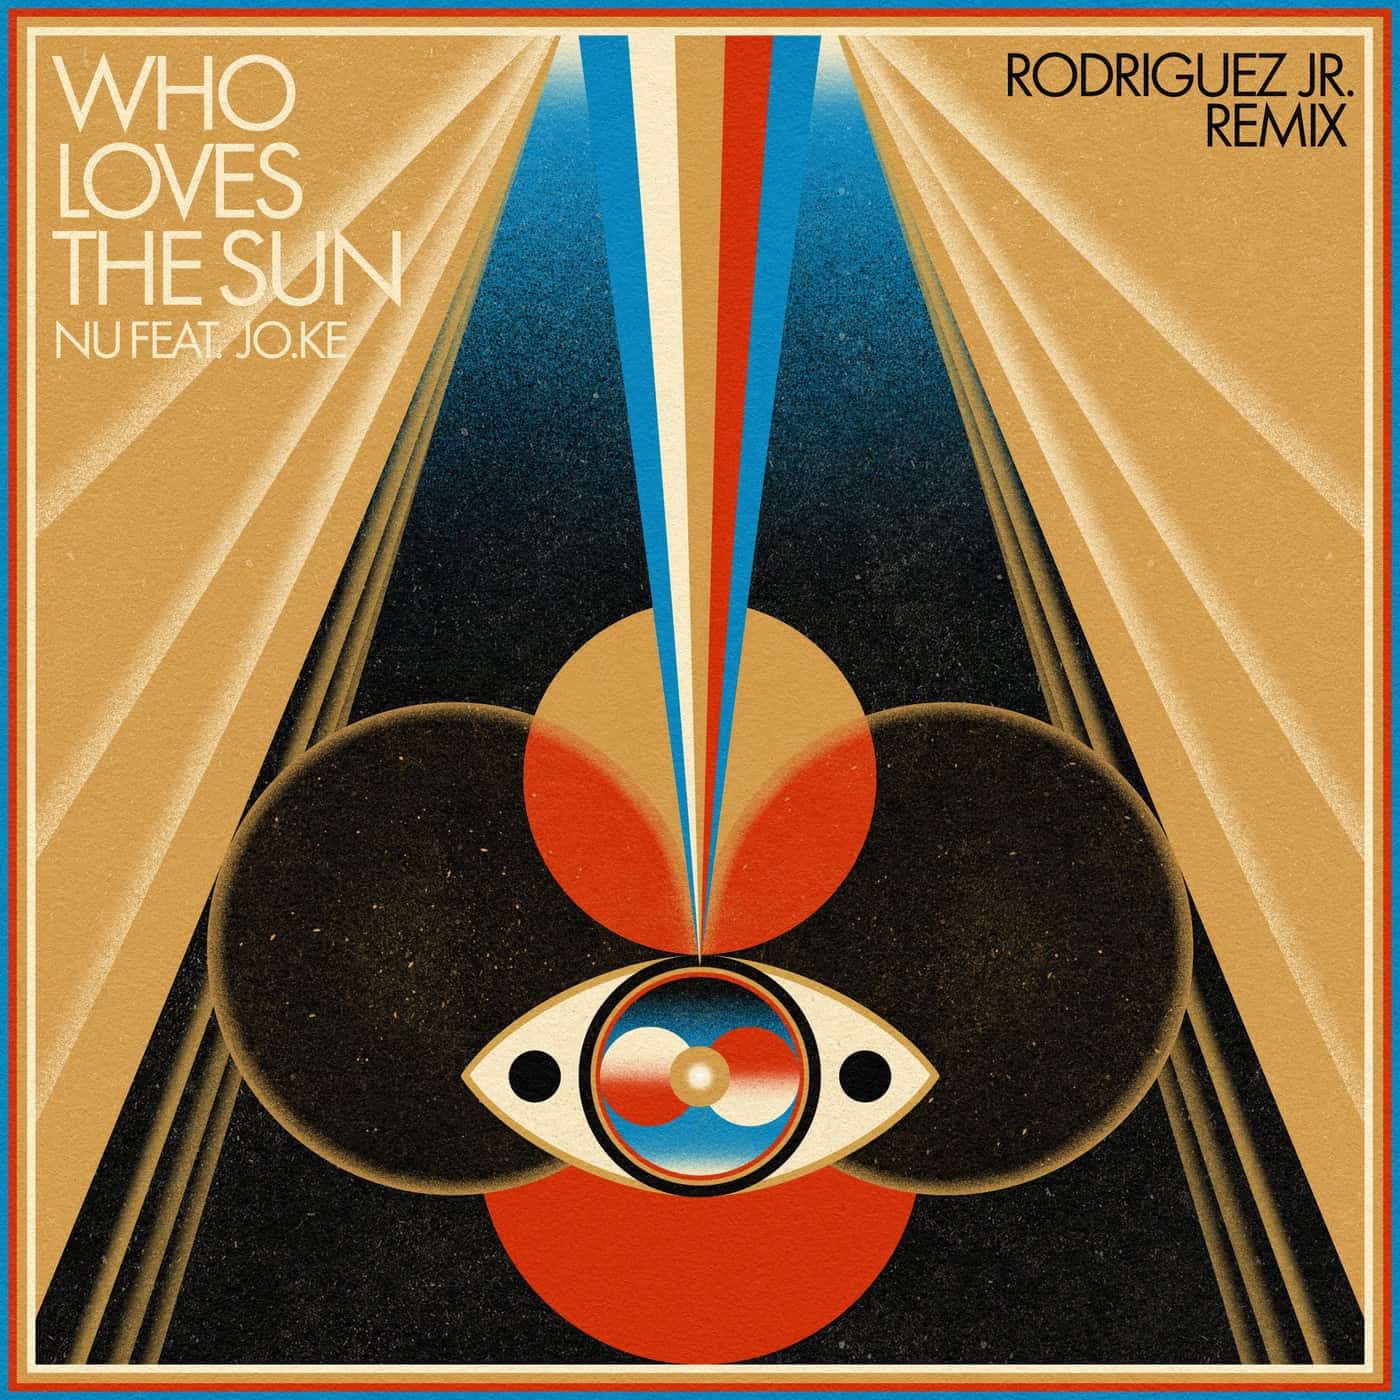 image cover: Nu, Jo.Ke - Who Loves The Sun (Rodriguez Jr. Remix) / Bar 25 Music